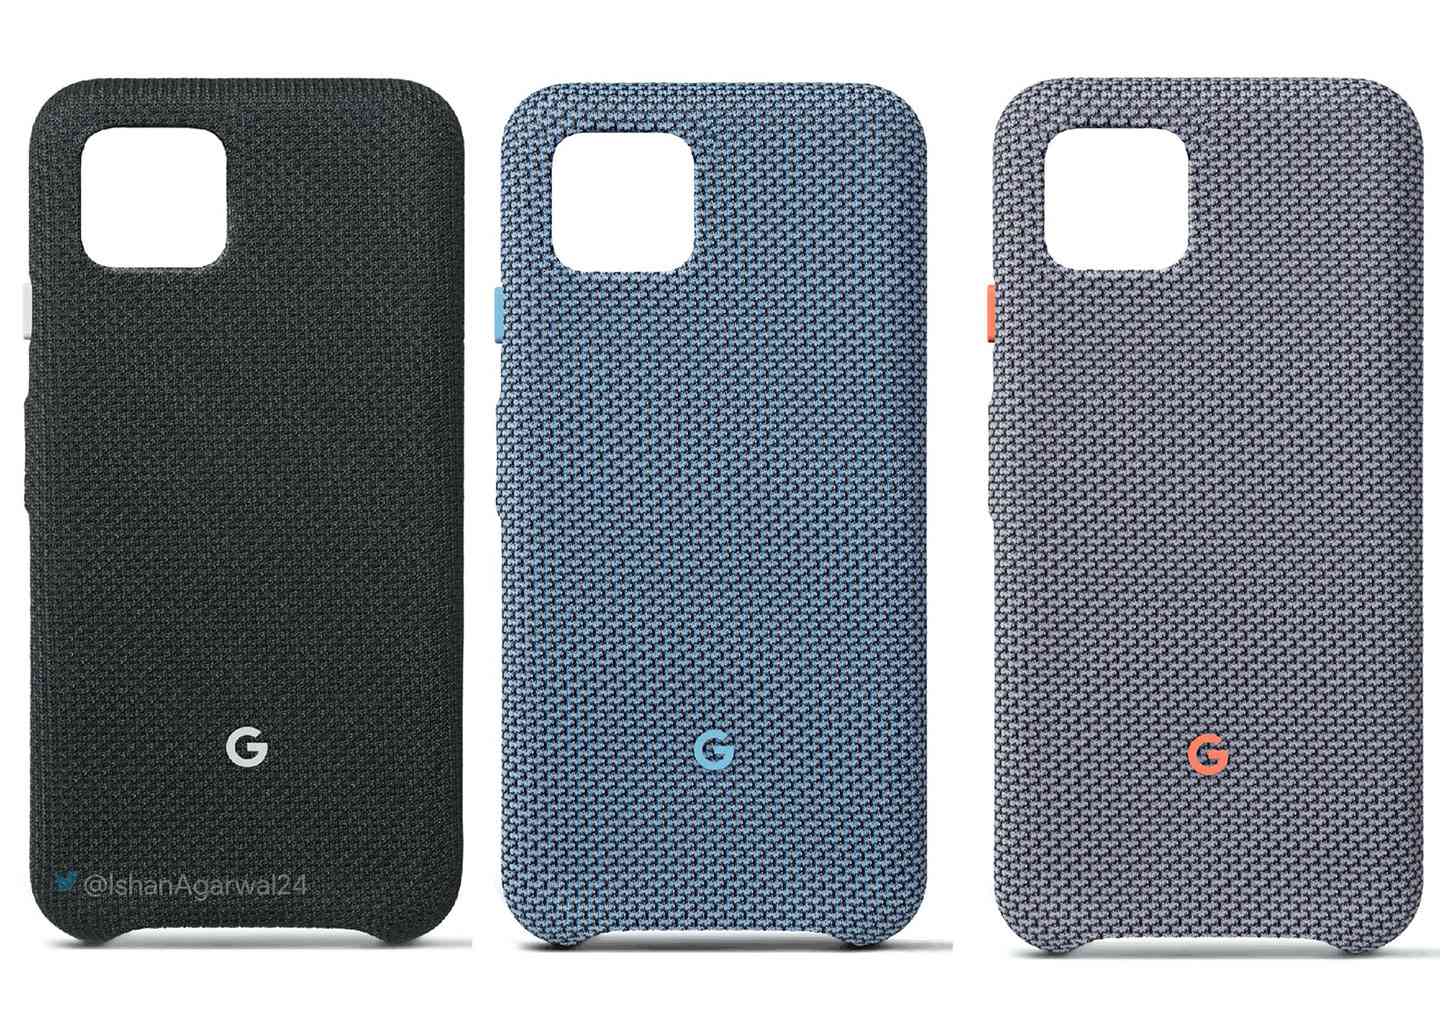 Pixel 4 Google cases